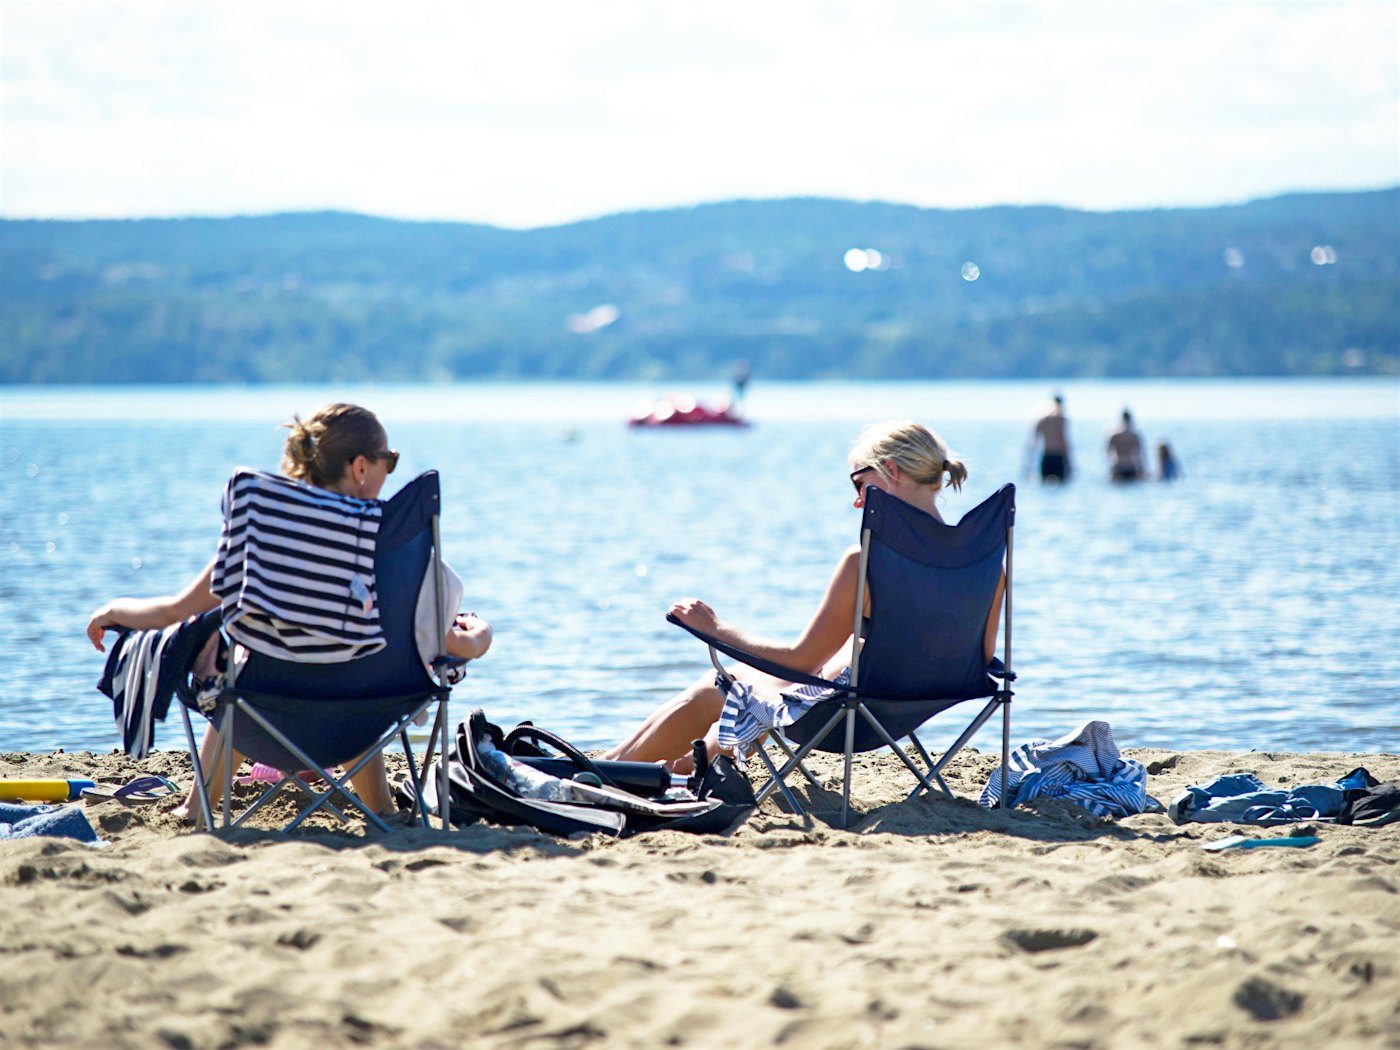 To damer sitter vendt fra kamera i strandstoler på stranden og ser utover vannet.